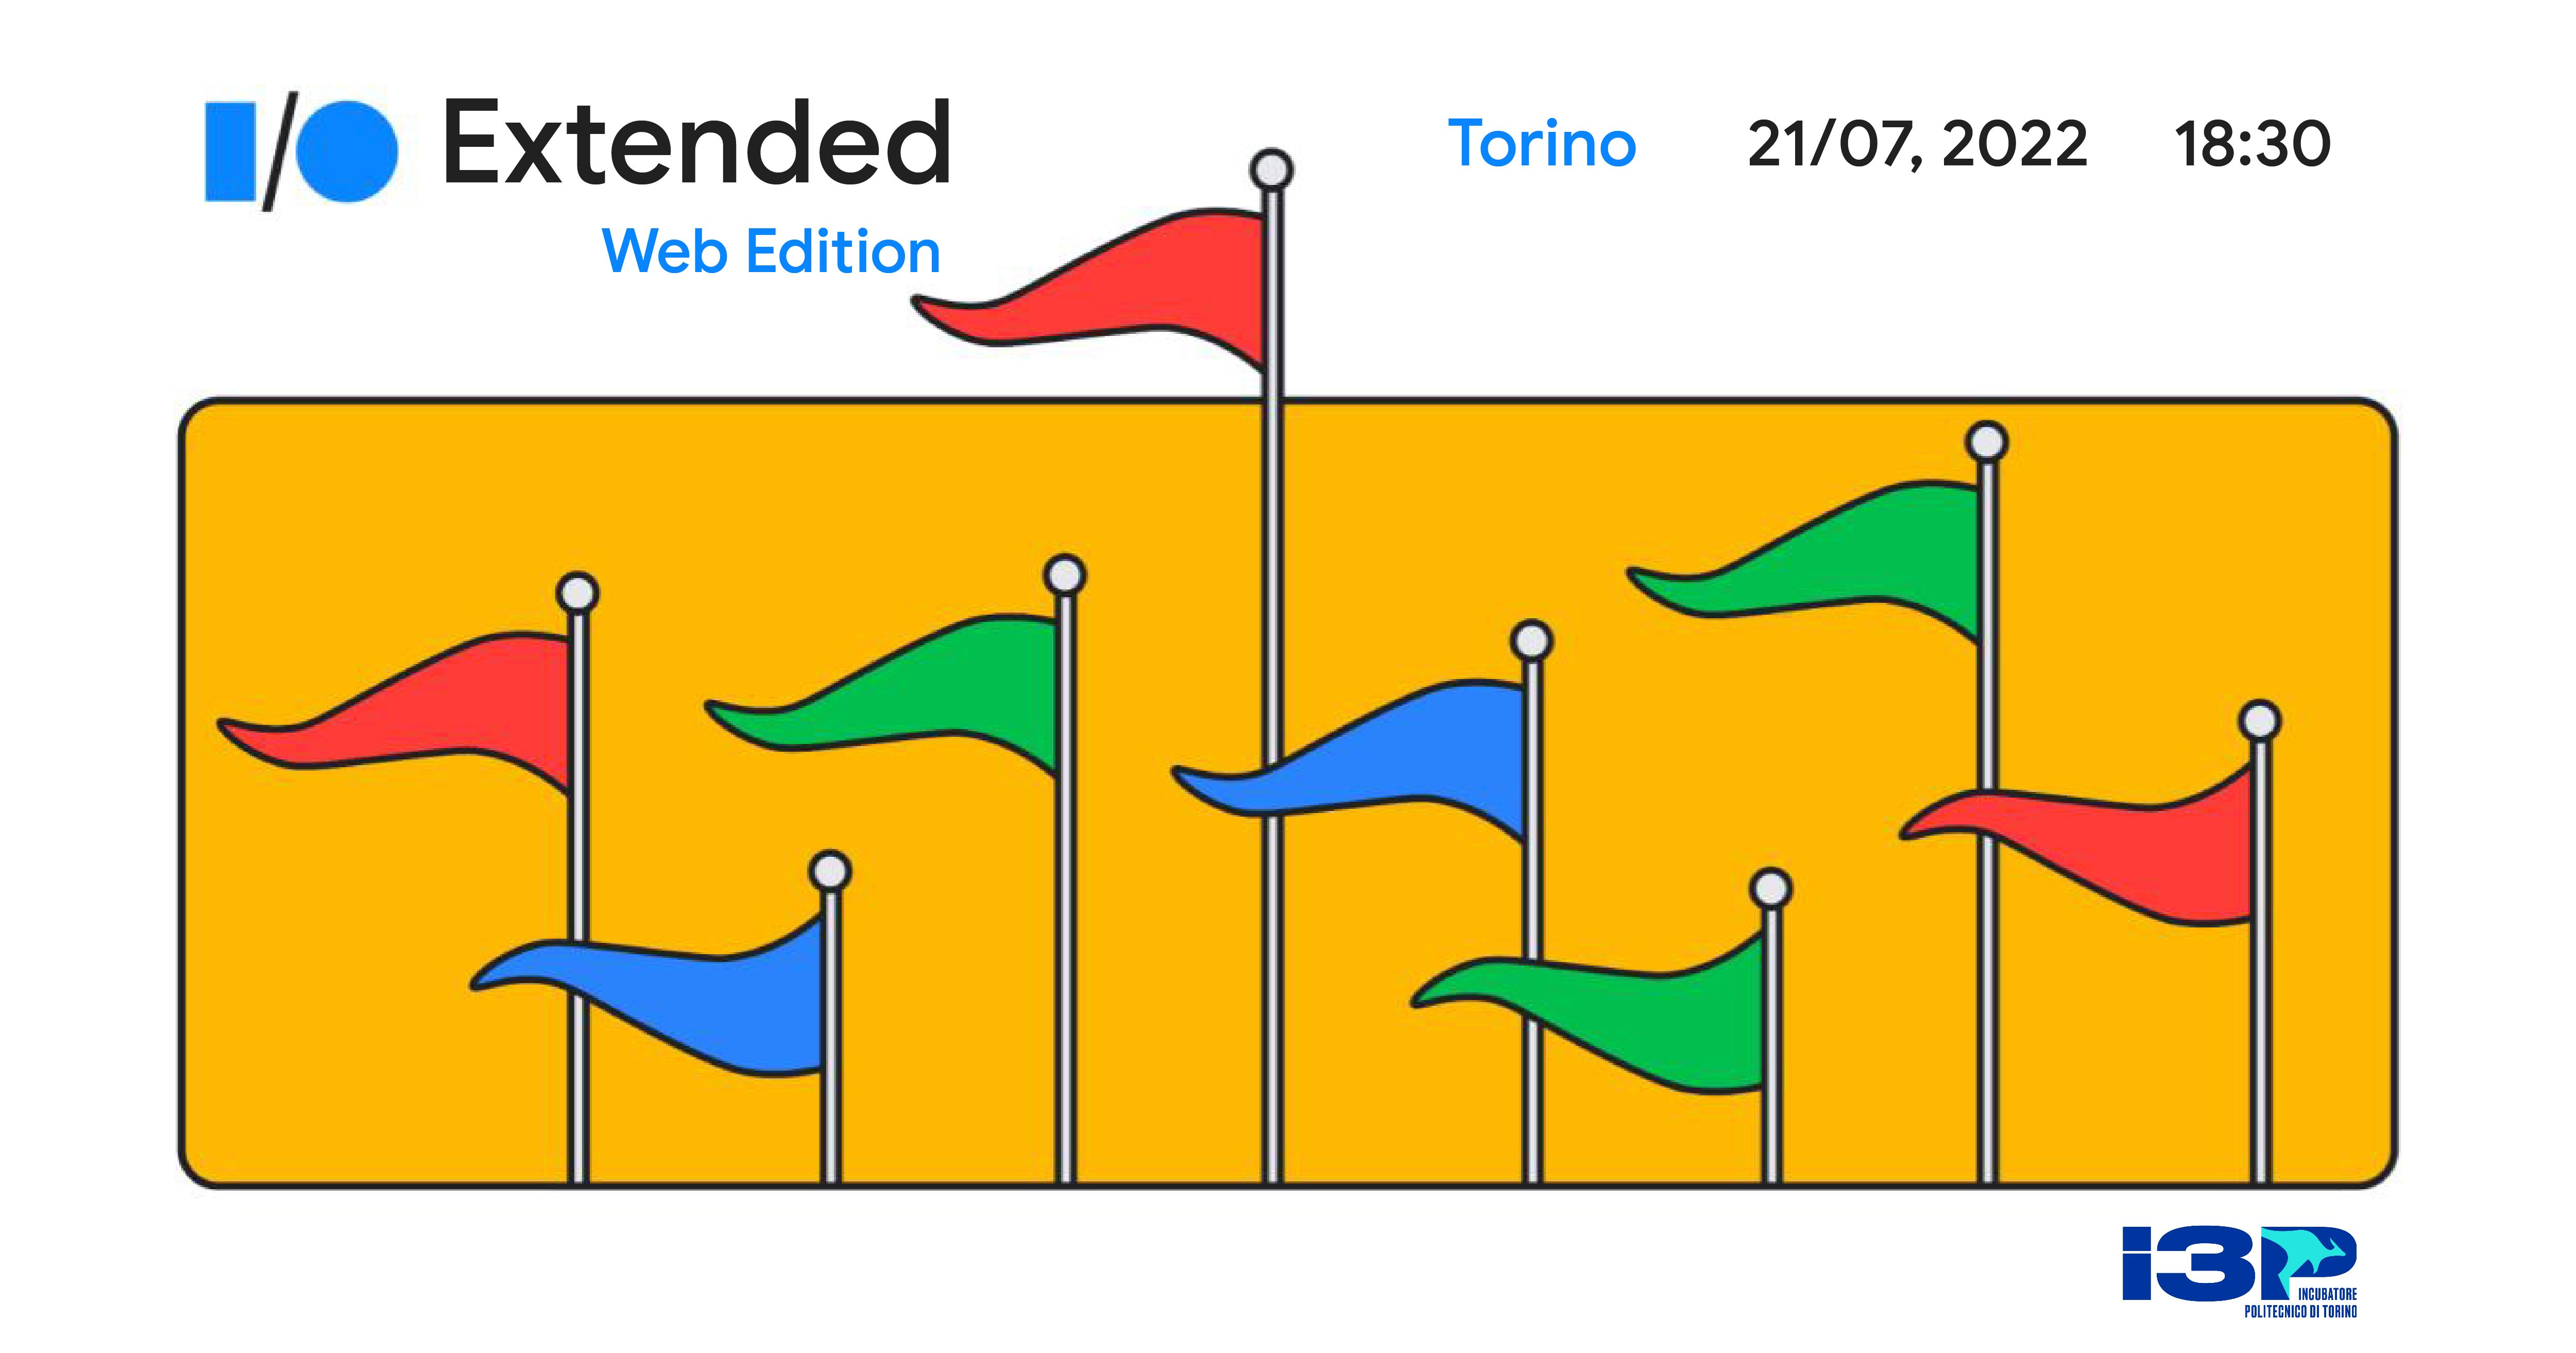 Google I/O Extended Web Edition - Torino